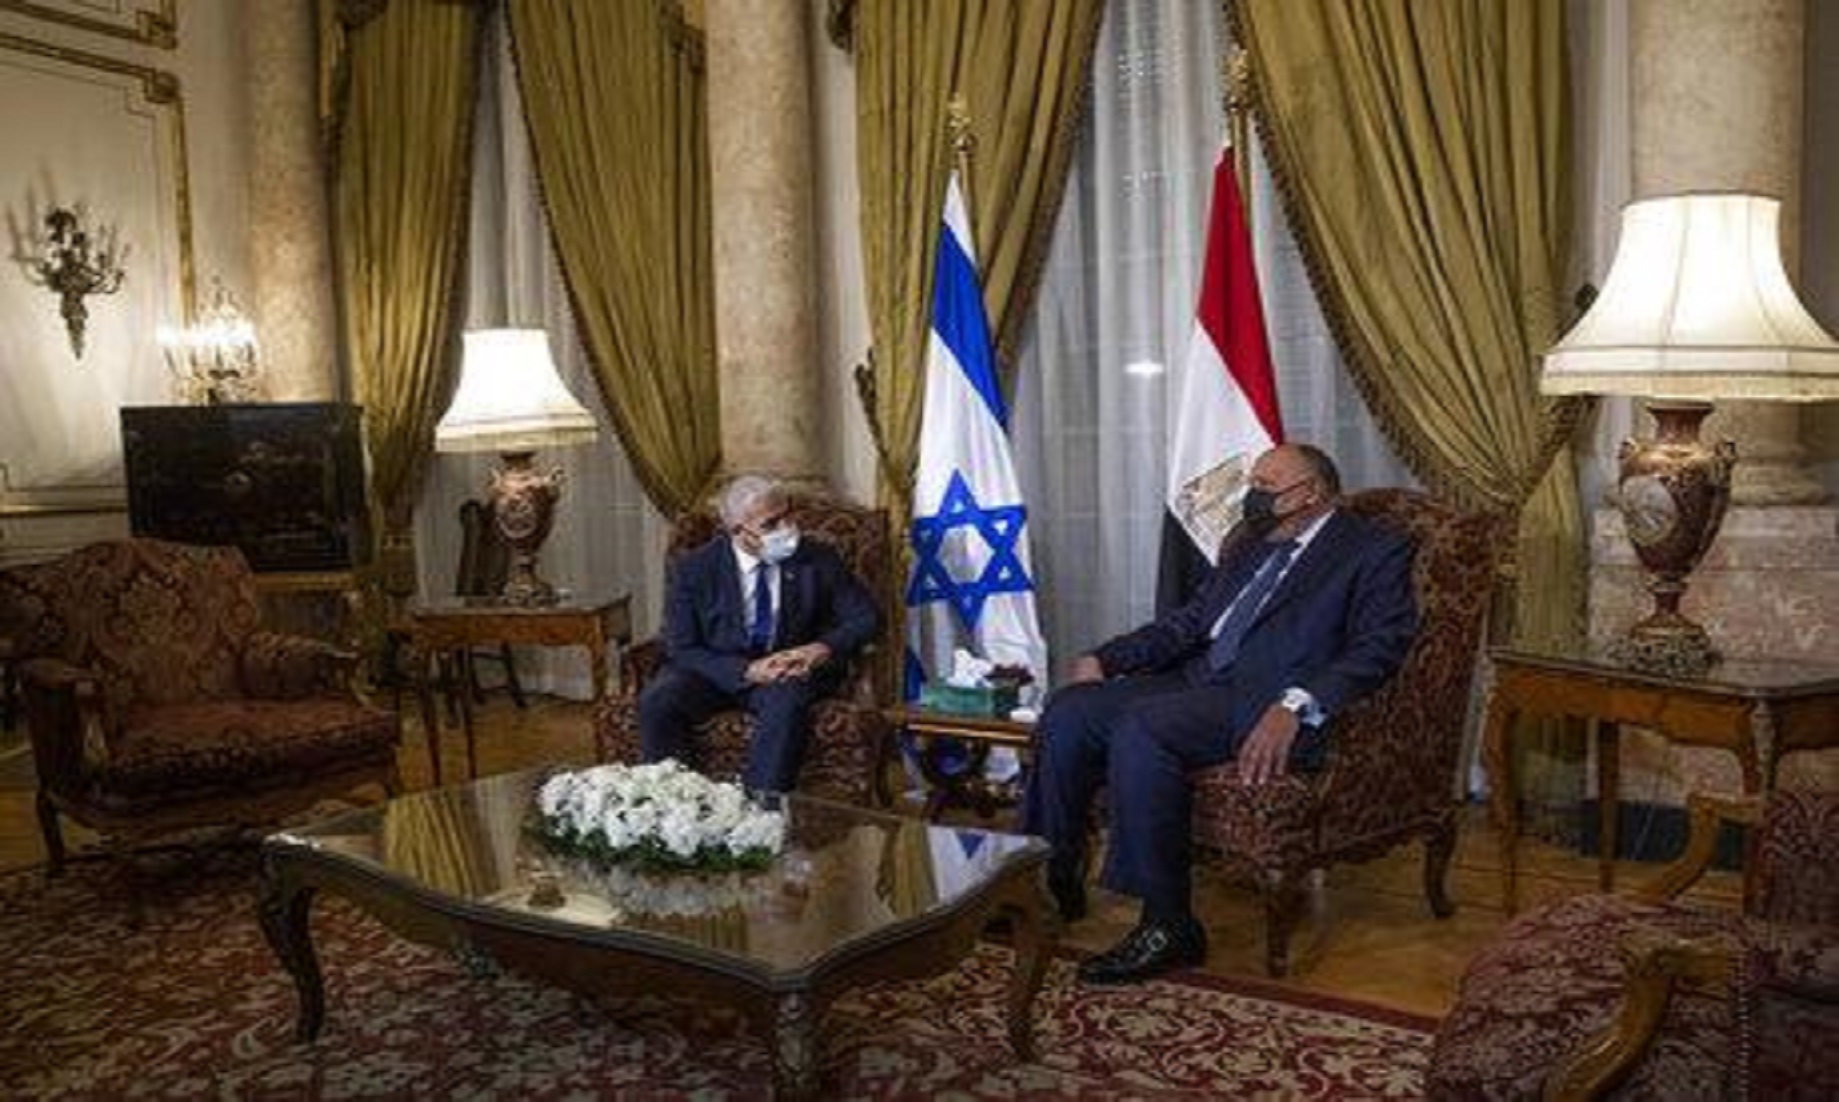 Israeli FM, Egyptian President Meet In Cairo To Strengthen Ties